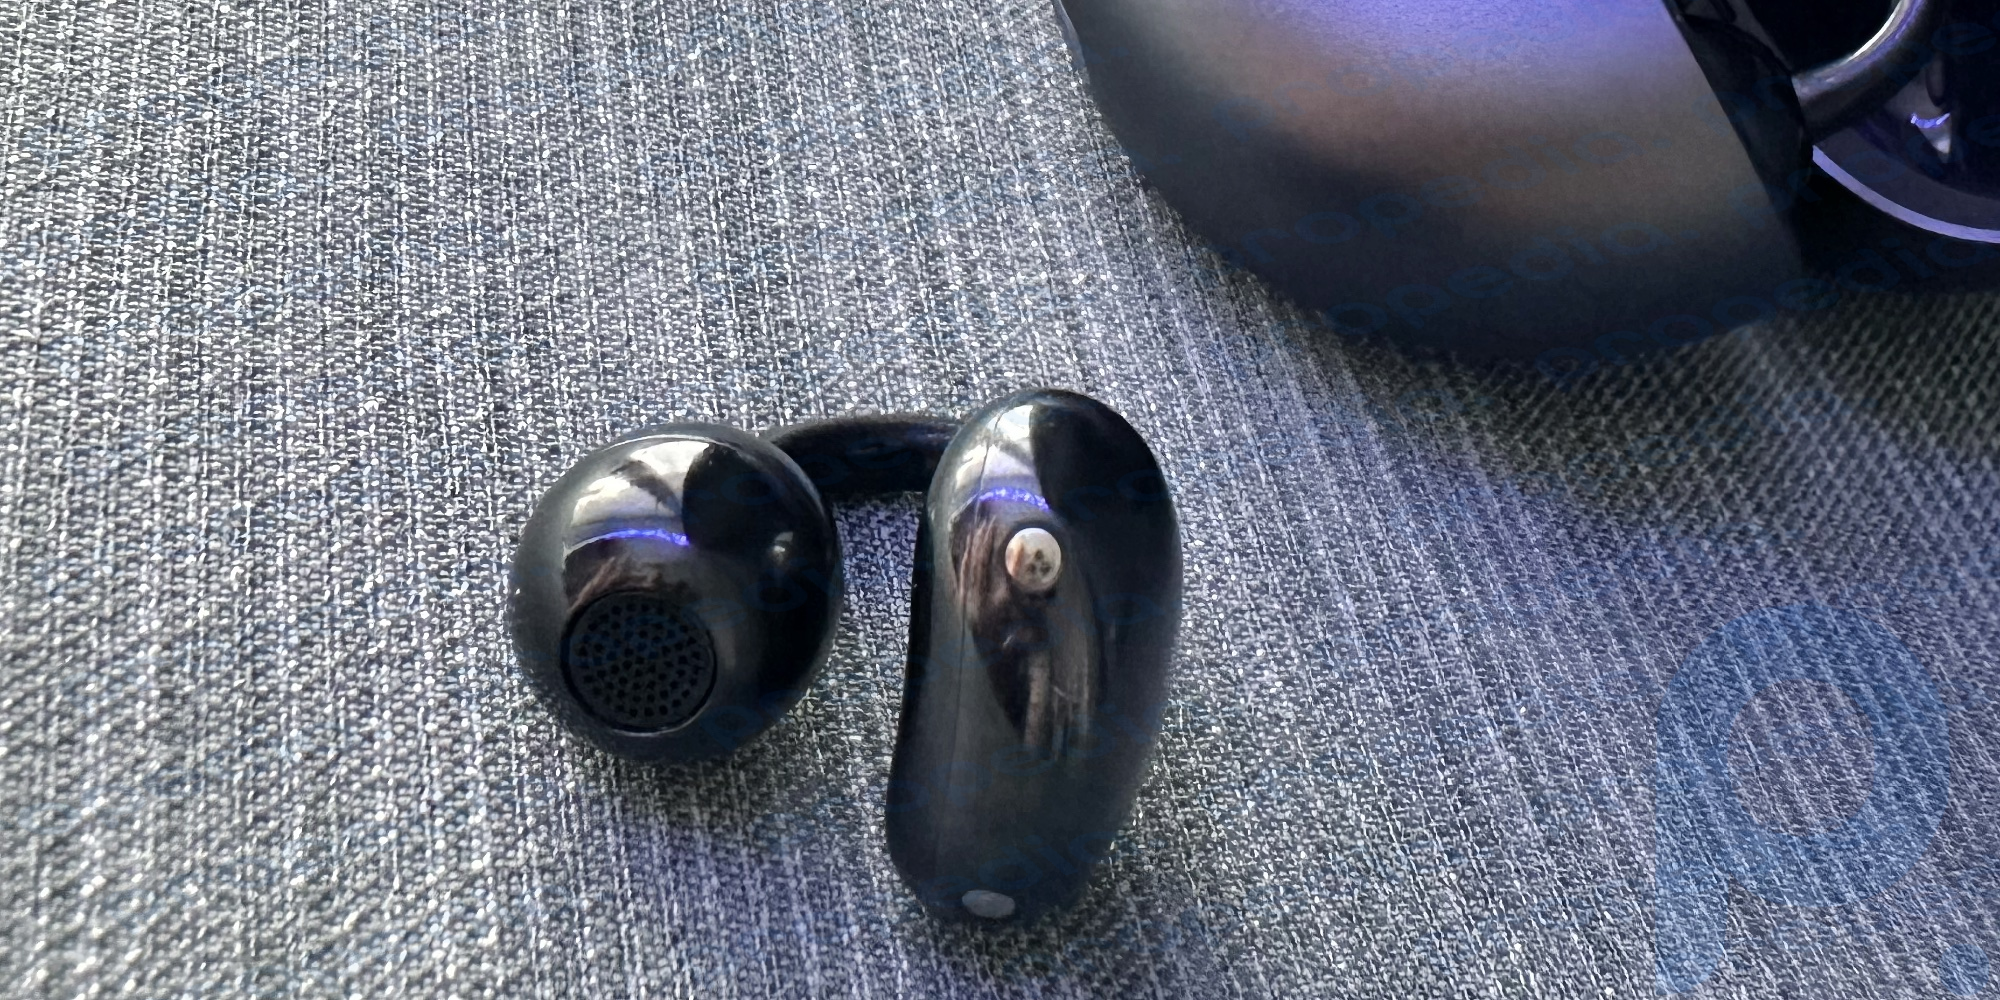 Huawei FreeClip headphones